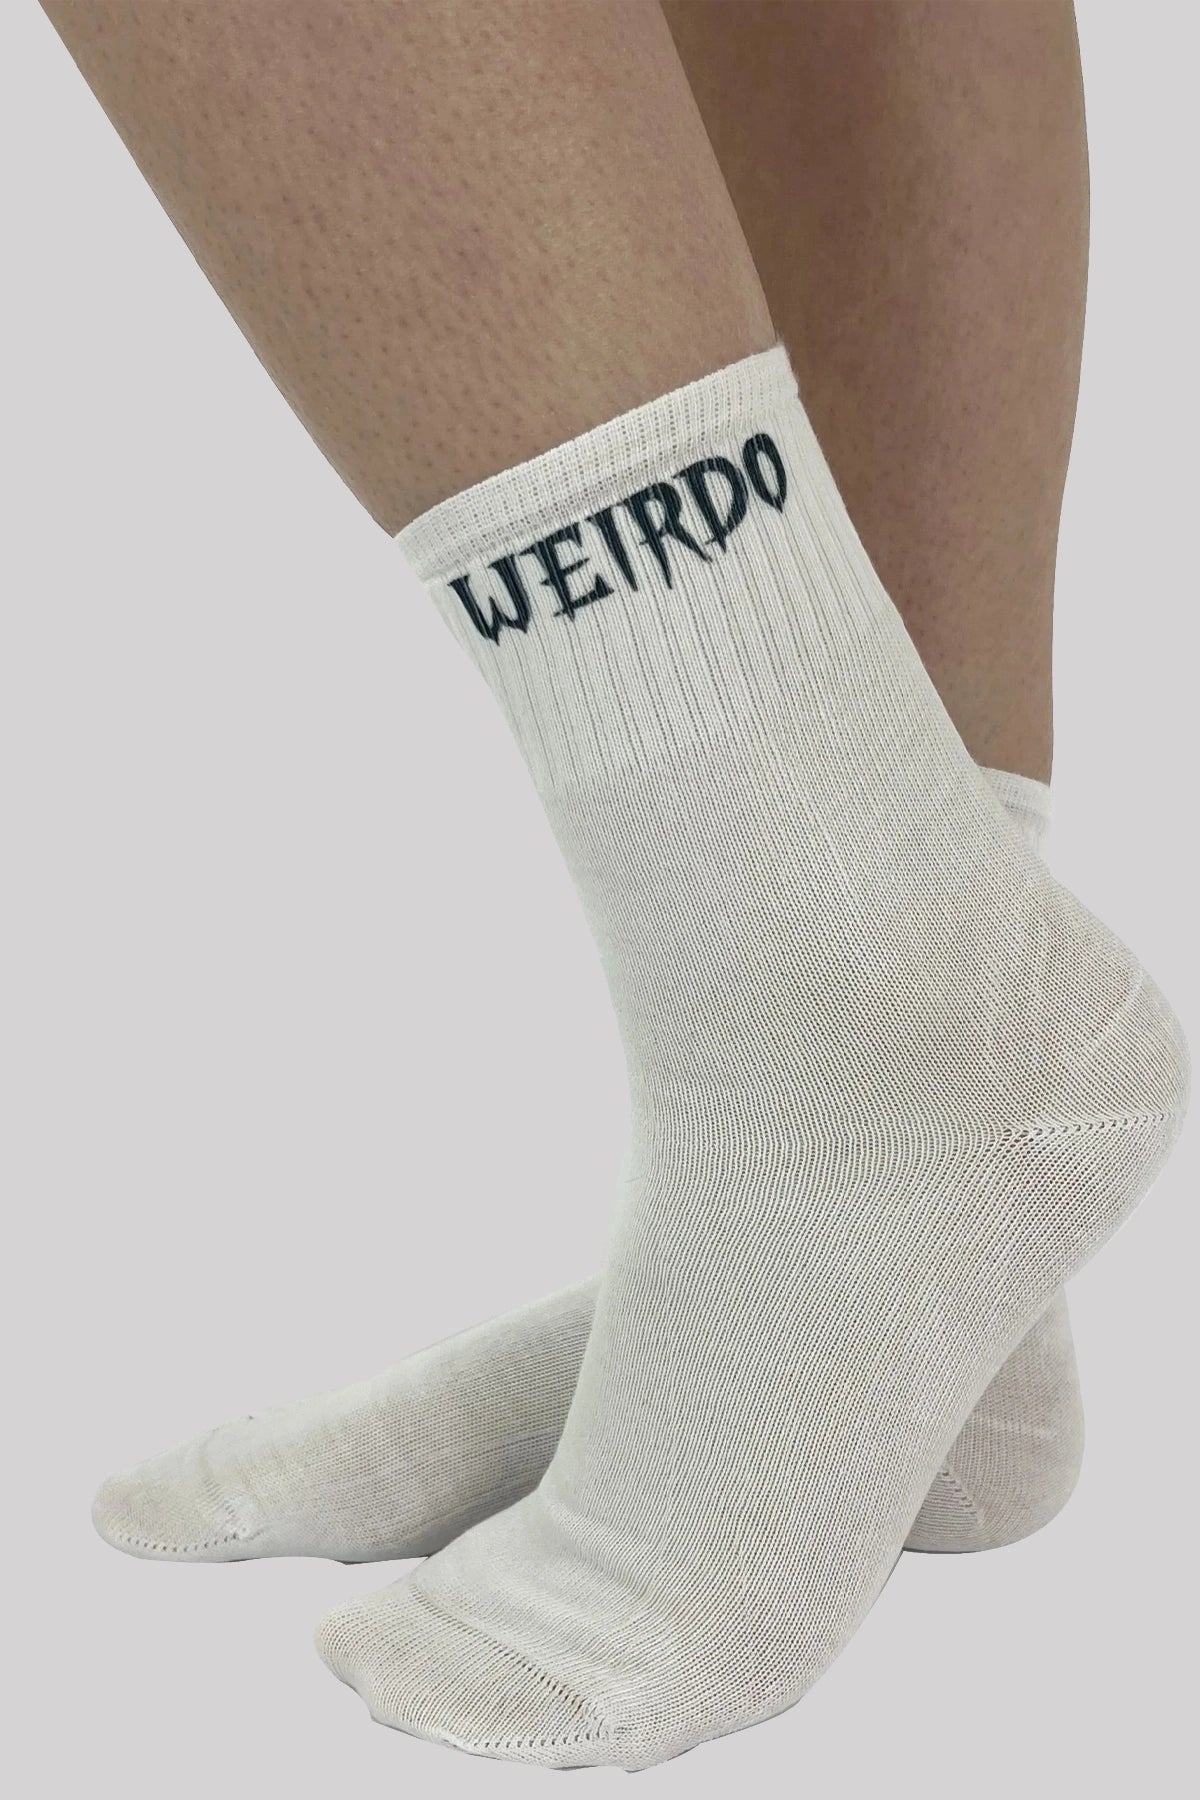 Pamela Mann Printed Crew Socks, Weirdo (One-Size)